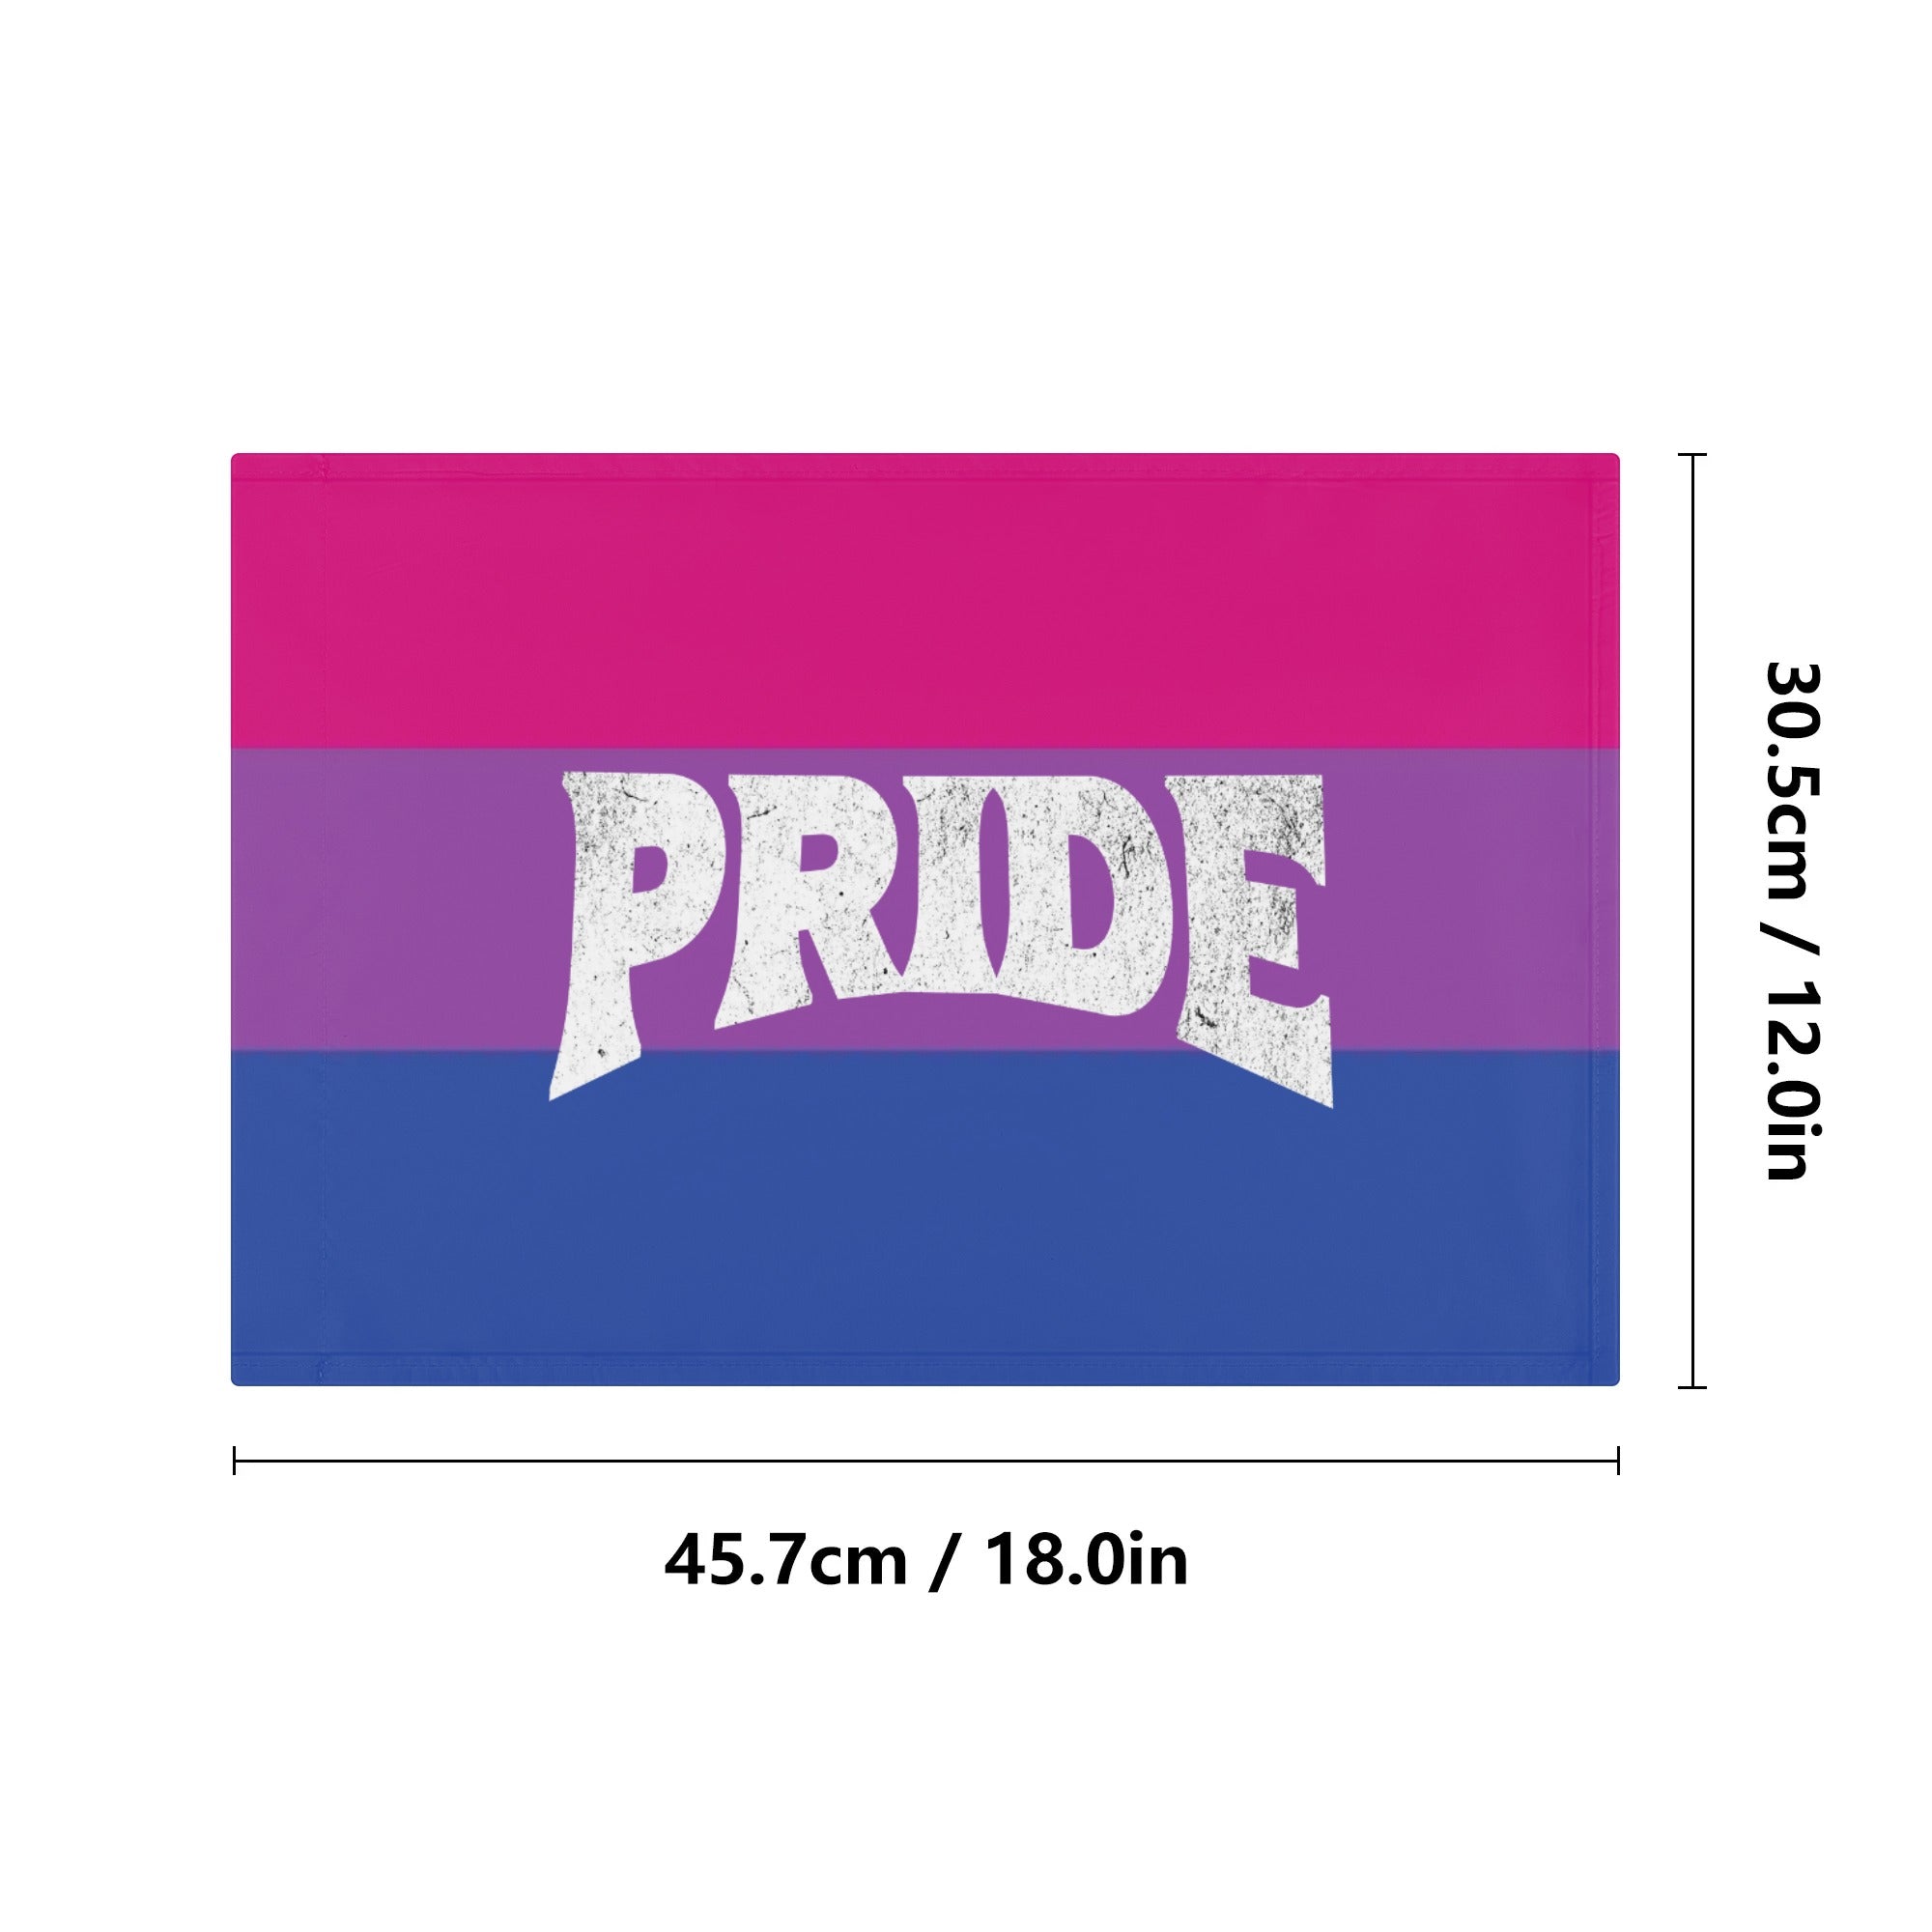 LGBT_Pride-Bisexual Pride Car Flag 12 x 18 - Rose Gold Co. Shop